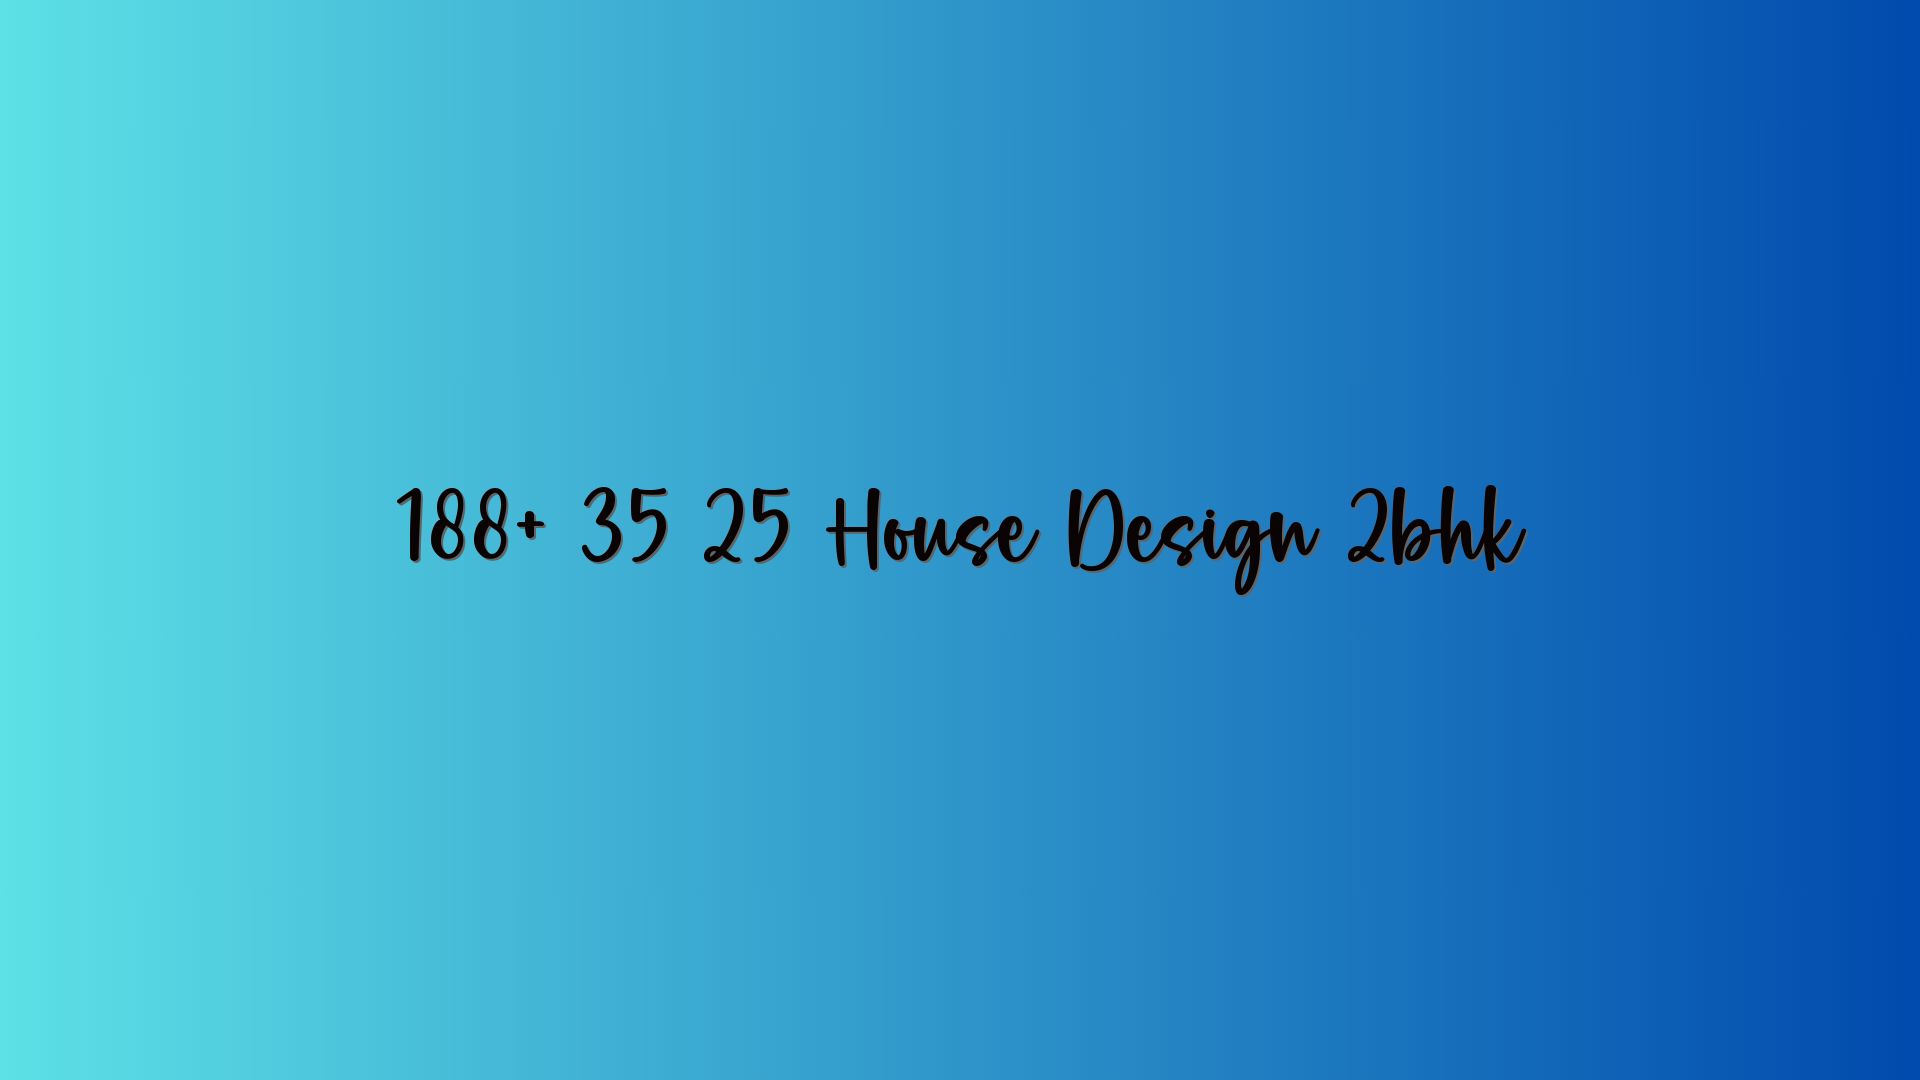 188+ 35 25 House Design 2bhk